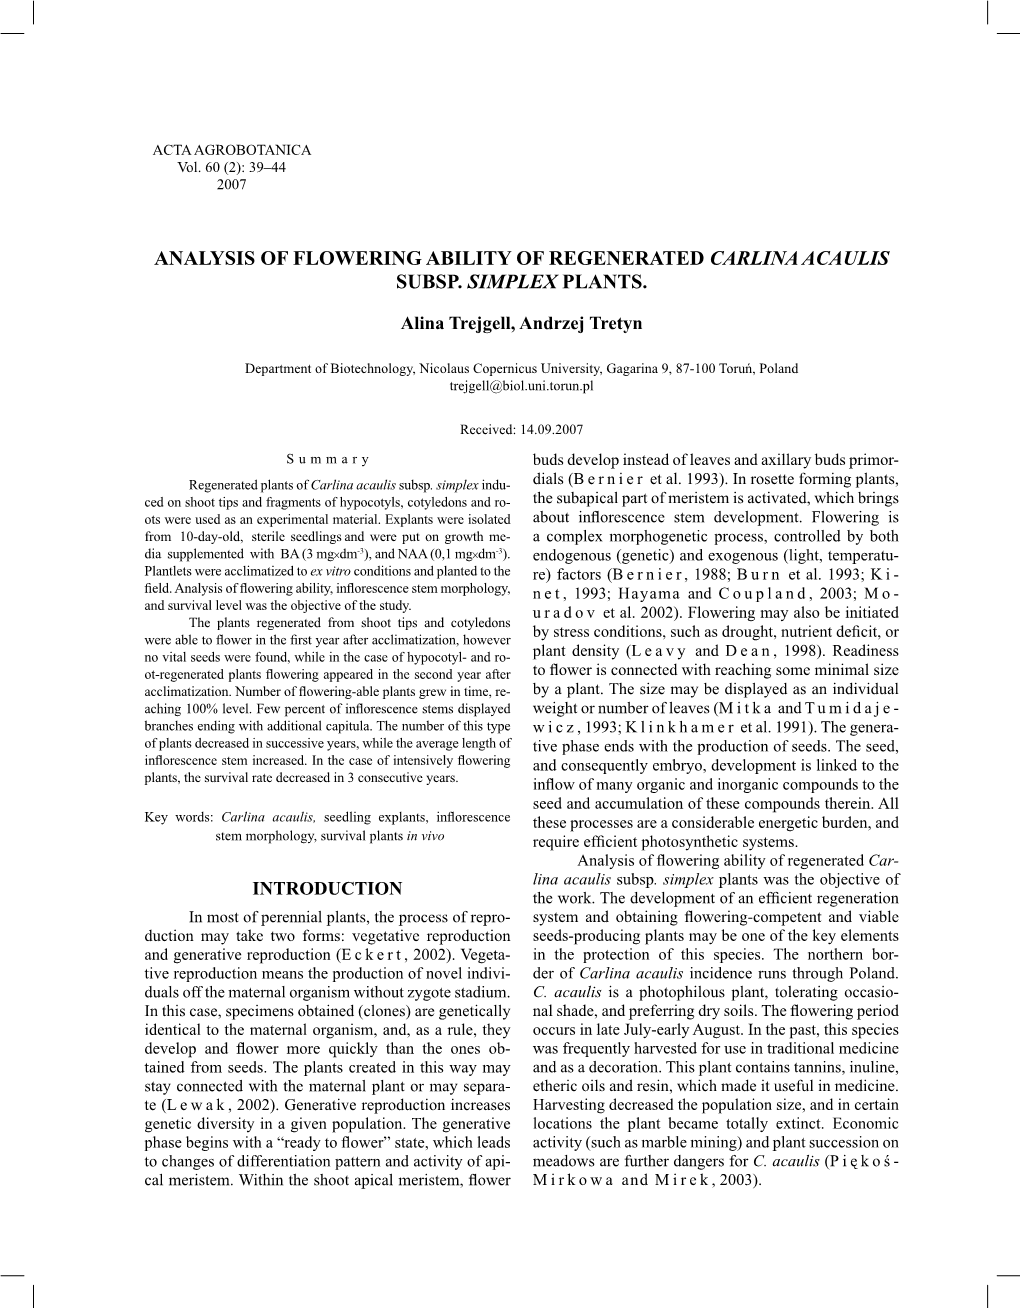 Analysis of Flowering Ability of Regenerated Carlina Acaulis Subsp